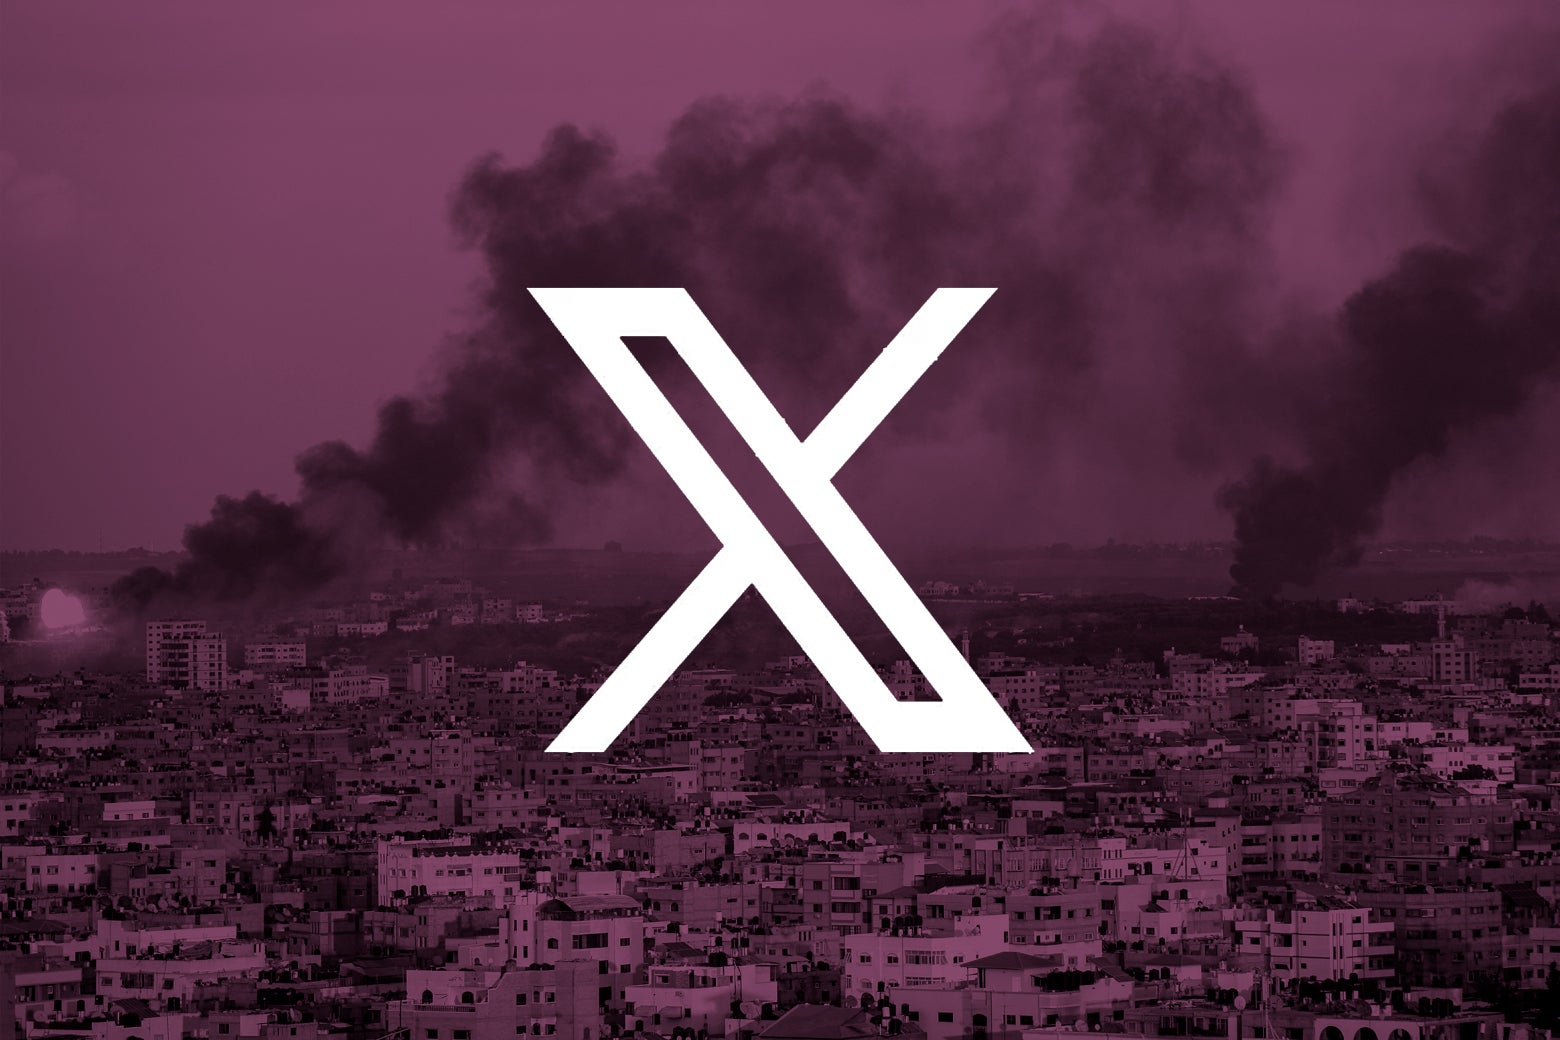 The X logo over a scene of smoke rising over the Gaza Strip.